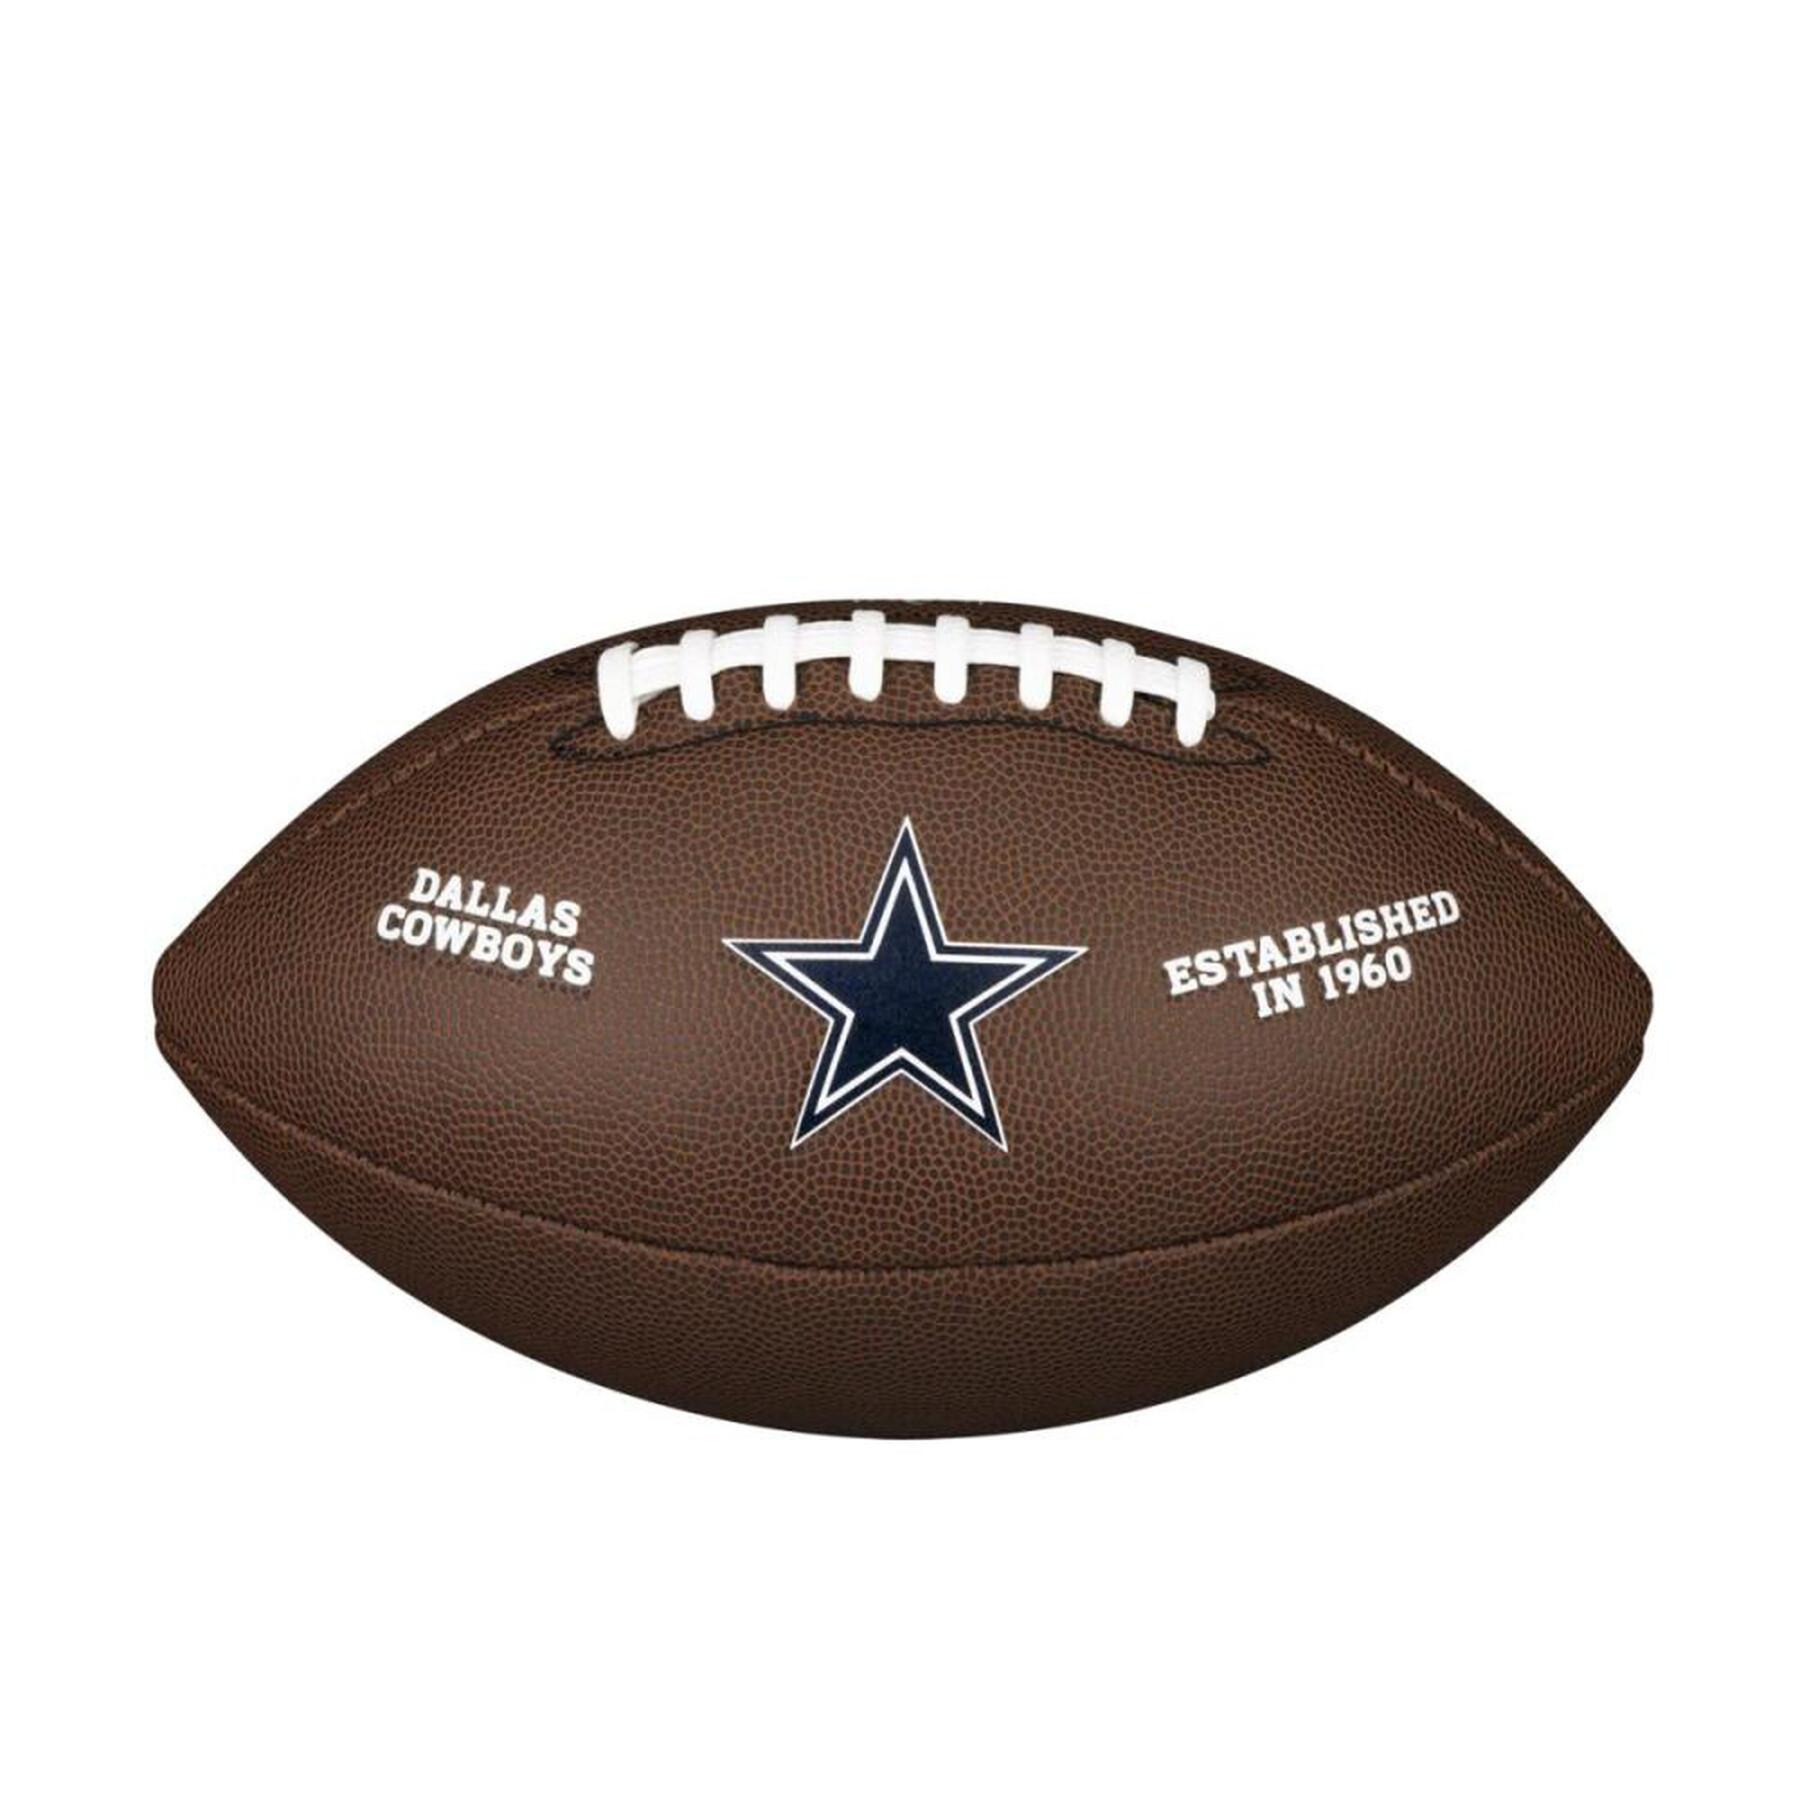 Balón Wilson Cowboys NFL Licensed